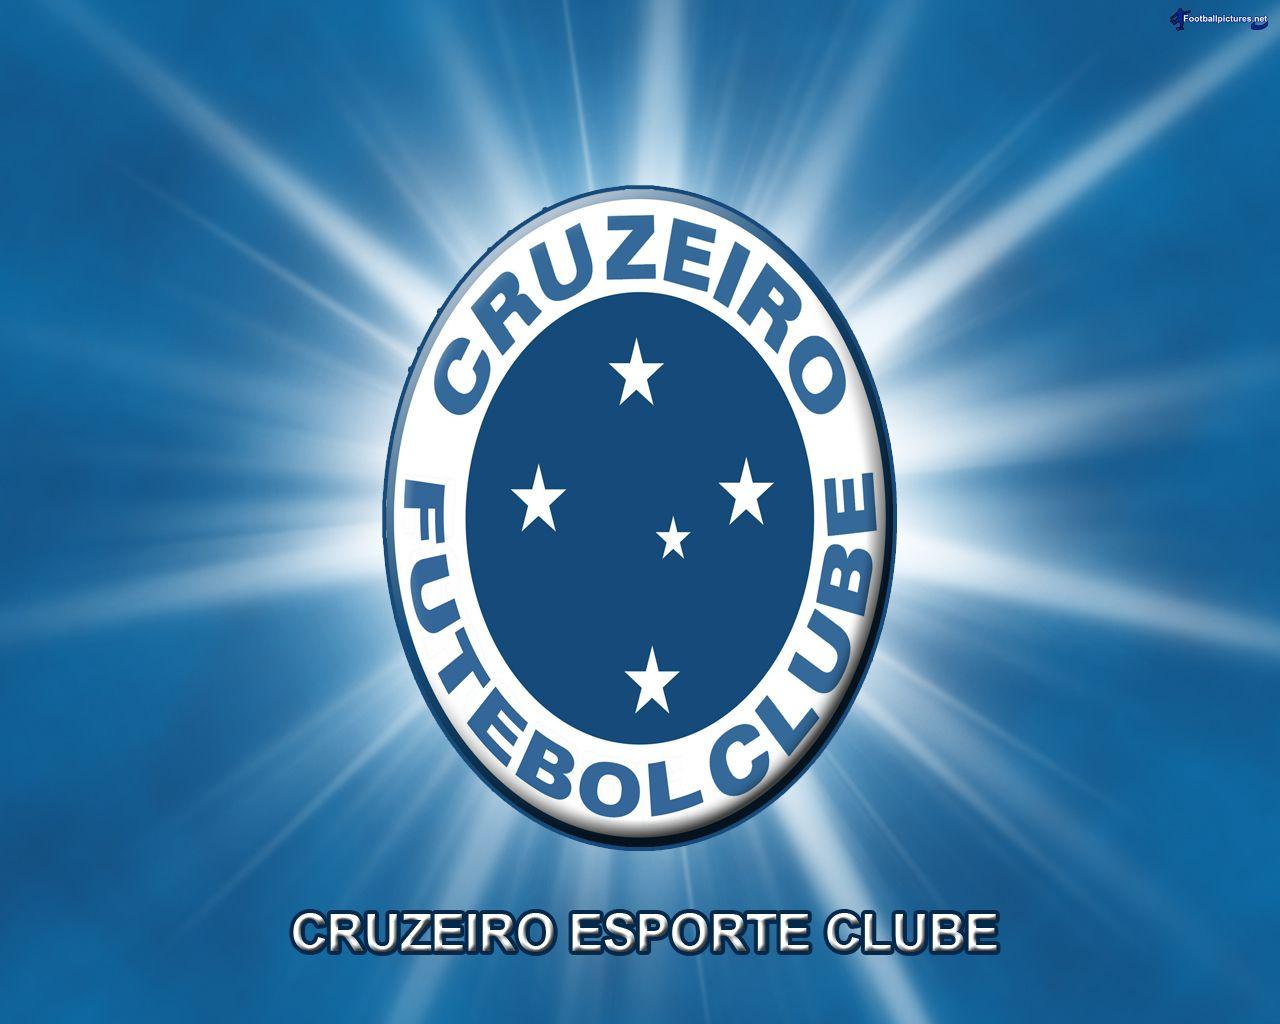 cruzeiro fc 2012 1280x1024 wallpaper, Football Picture and Photo